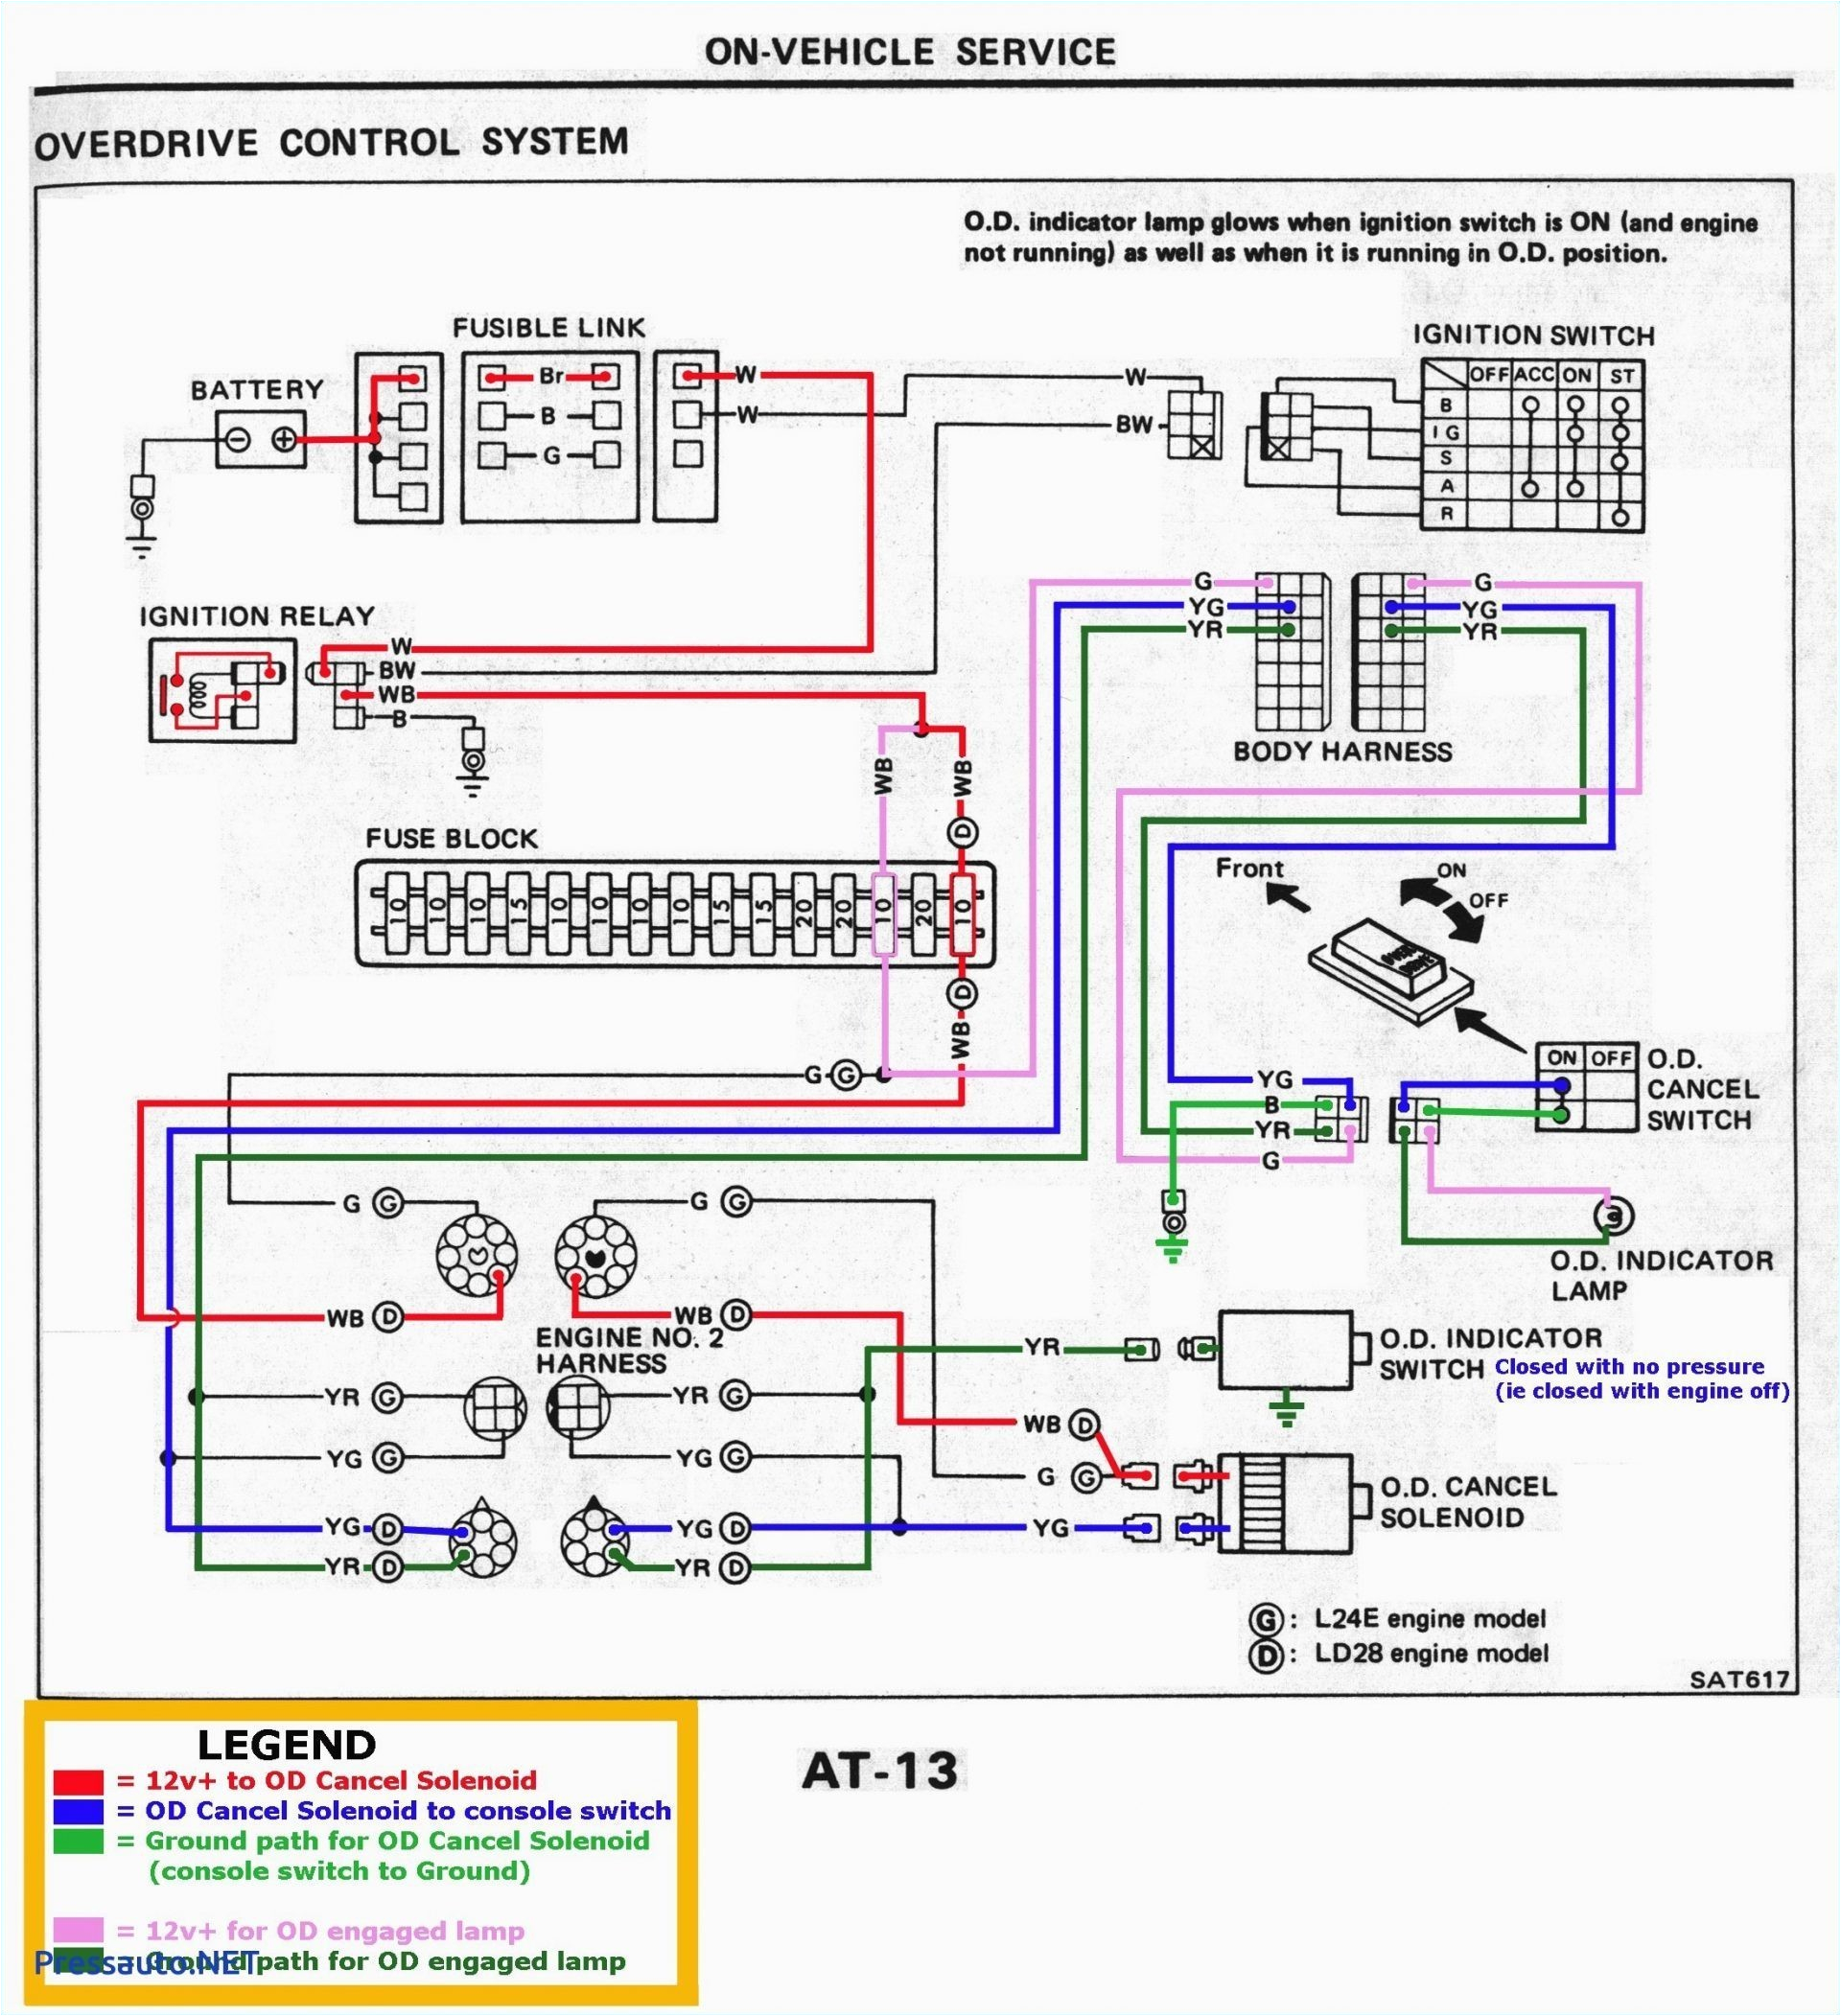 emergency vehicle wiring diagram wiring diagram horton emergency vehicles wiring diagram emergency vehicle wiring diagram